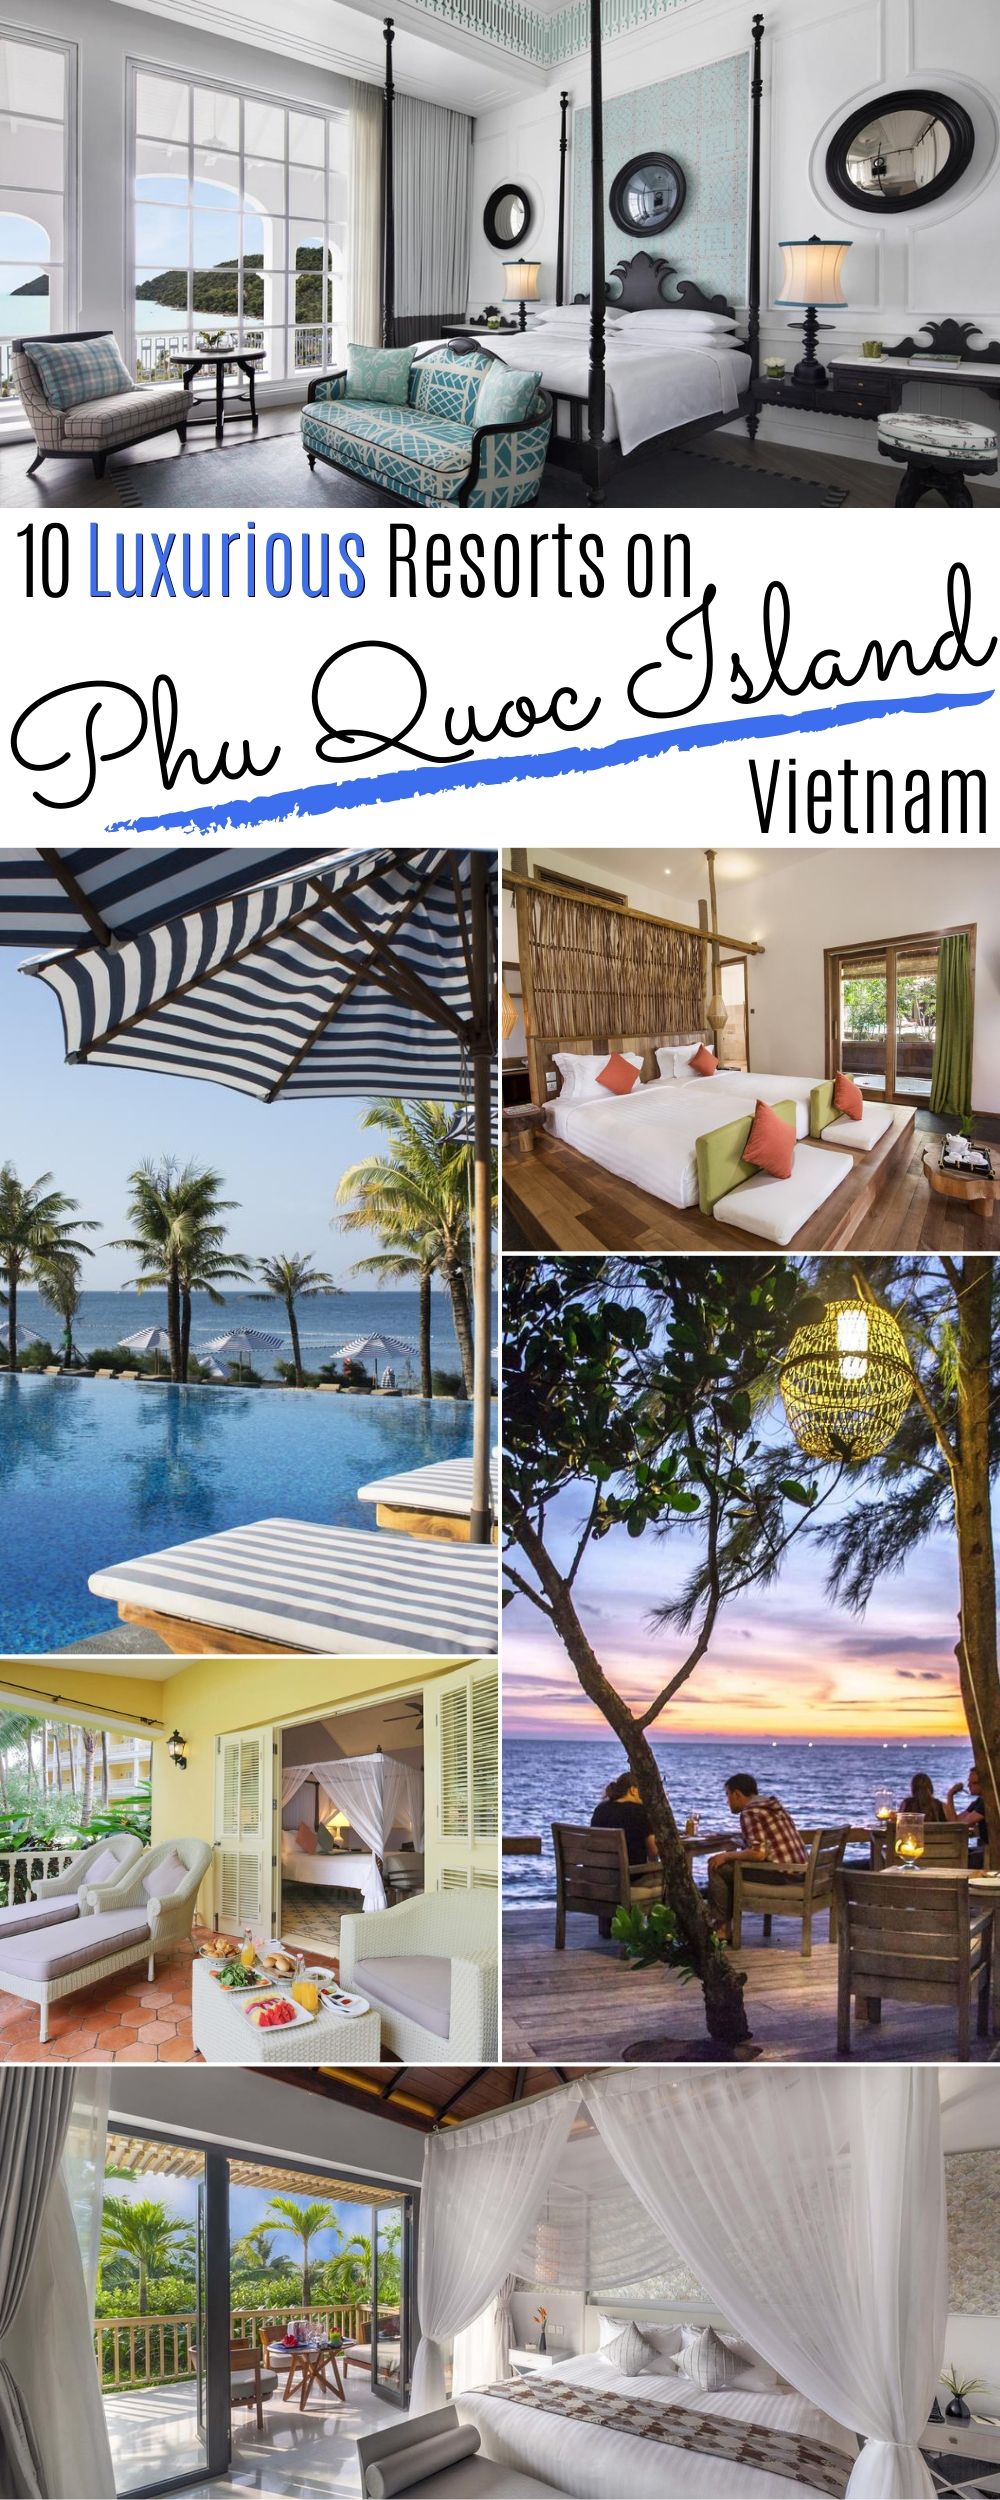 Luxurious Resorts on Phu Quoc Island, Vietnam on Pinterest